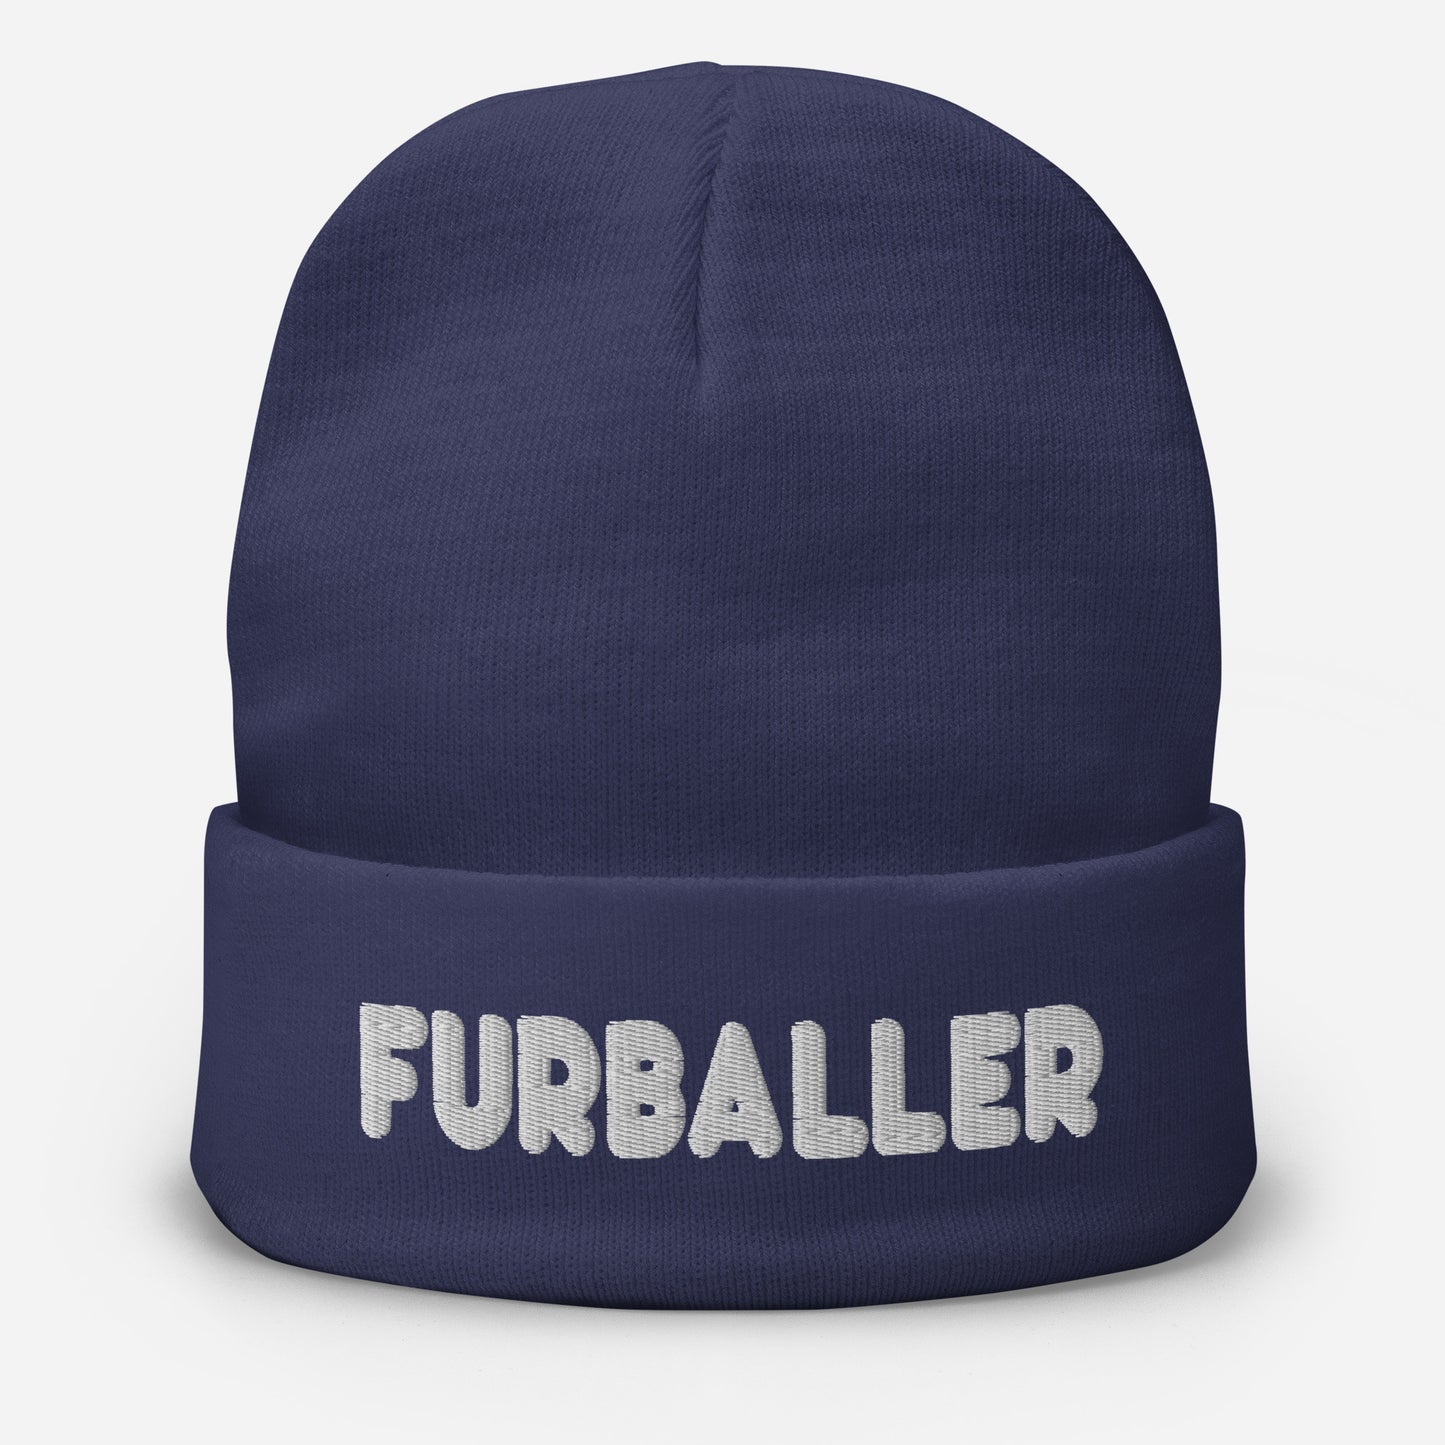 Furballer - Embroidered Beanie